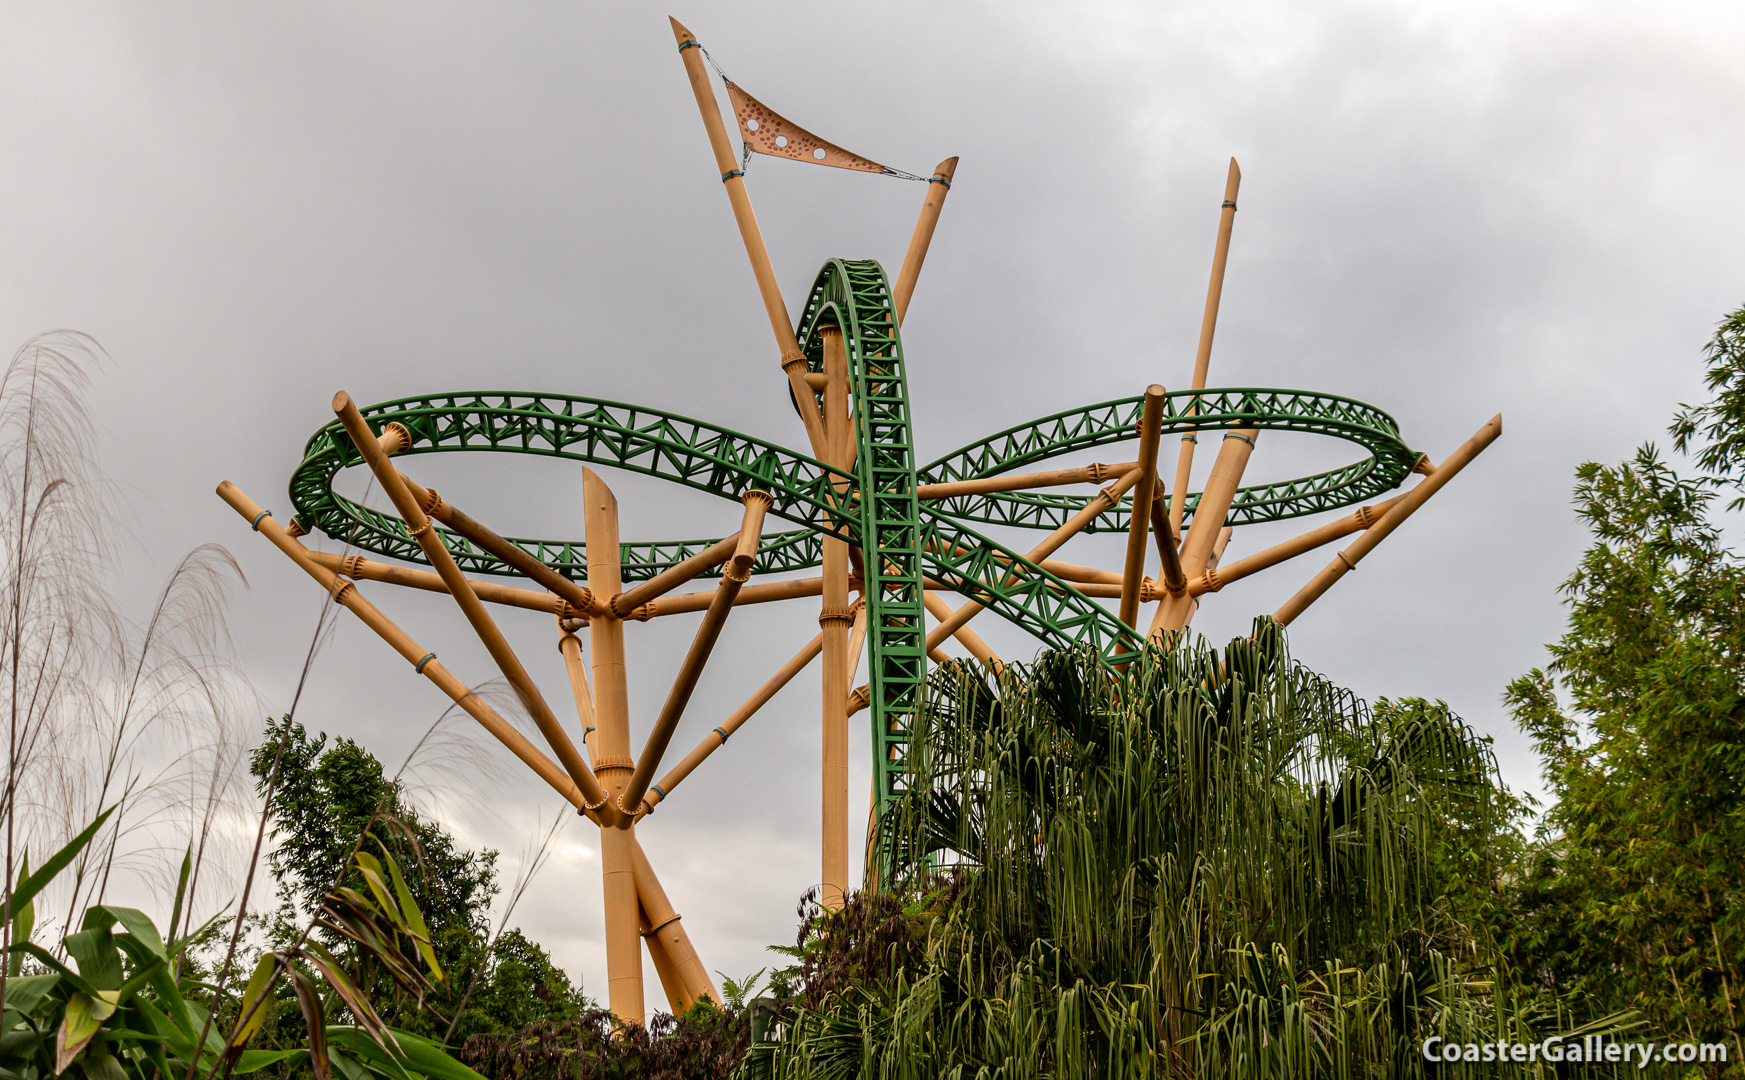 Windcatcher tower on the Cheetah Hunt roller coaster at Busch Gardens Tampa